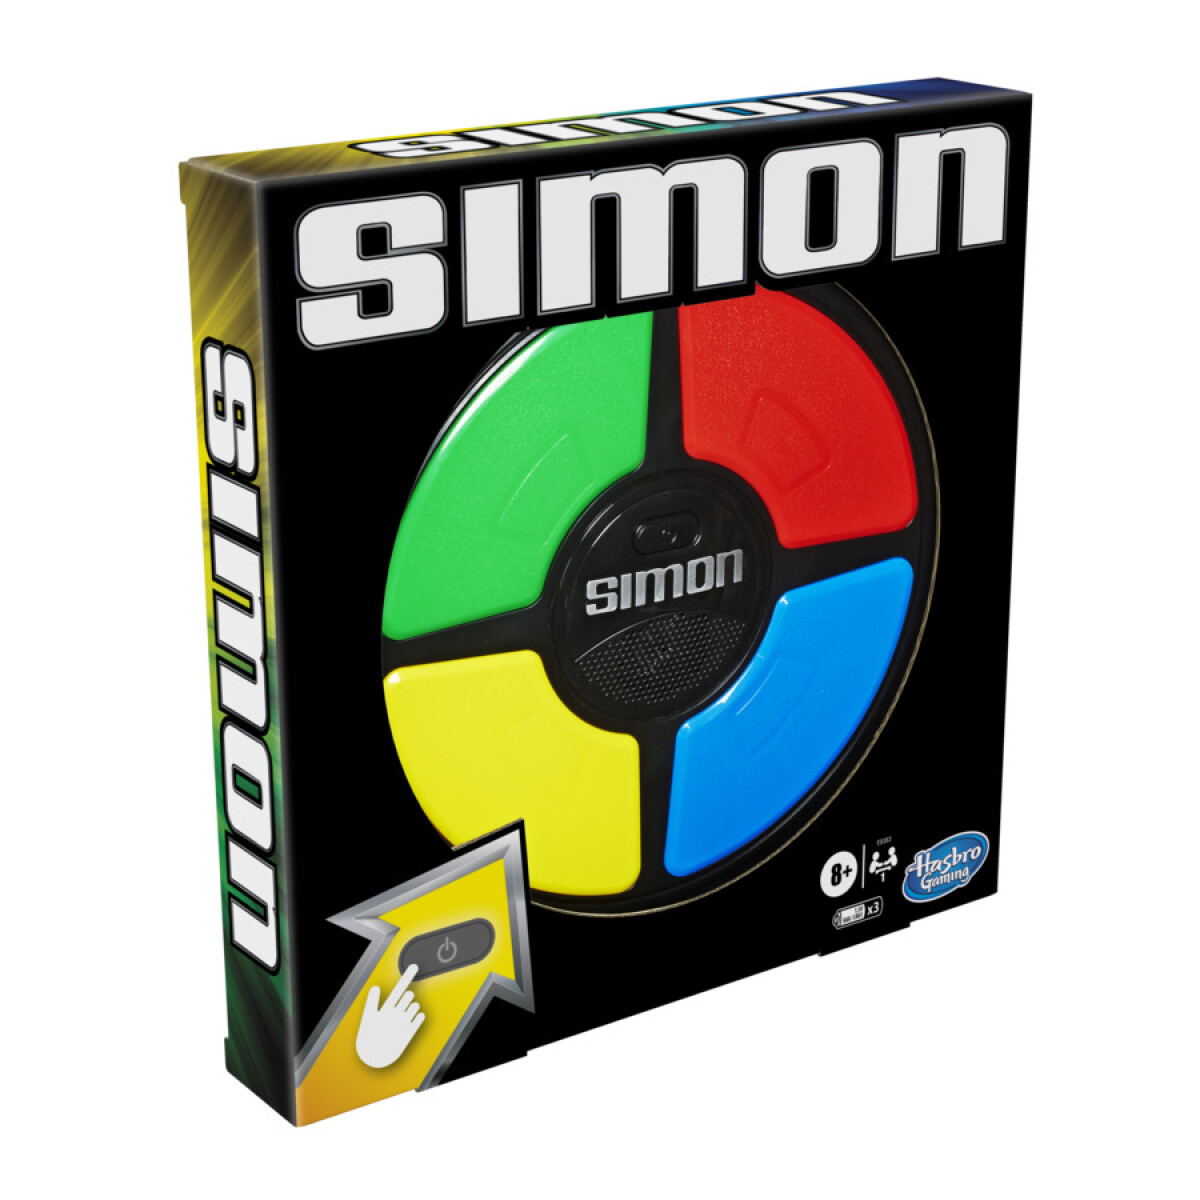 Simon clasico - Prepárate para un juego rápido con luces y sonidos - 001 